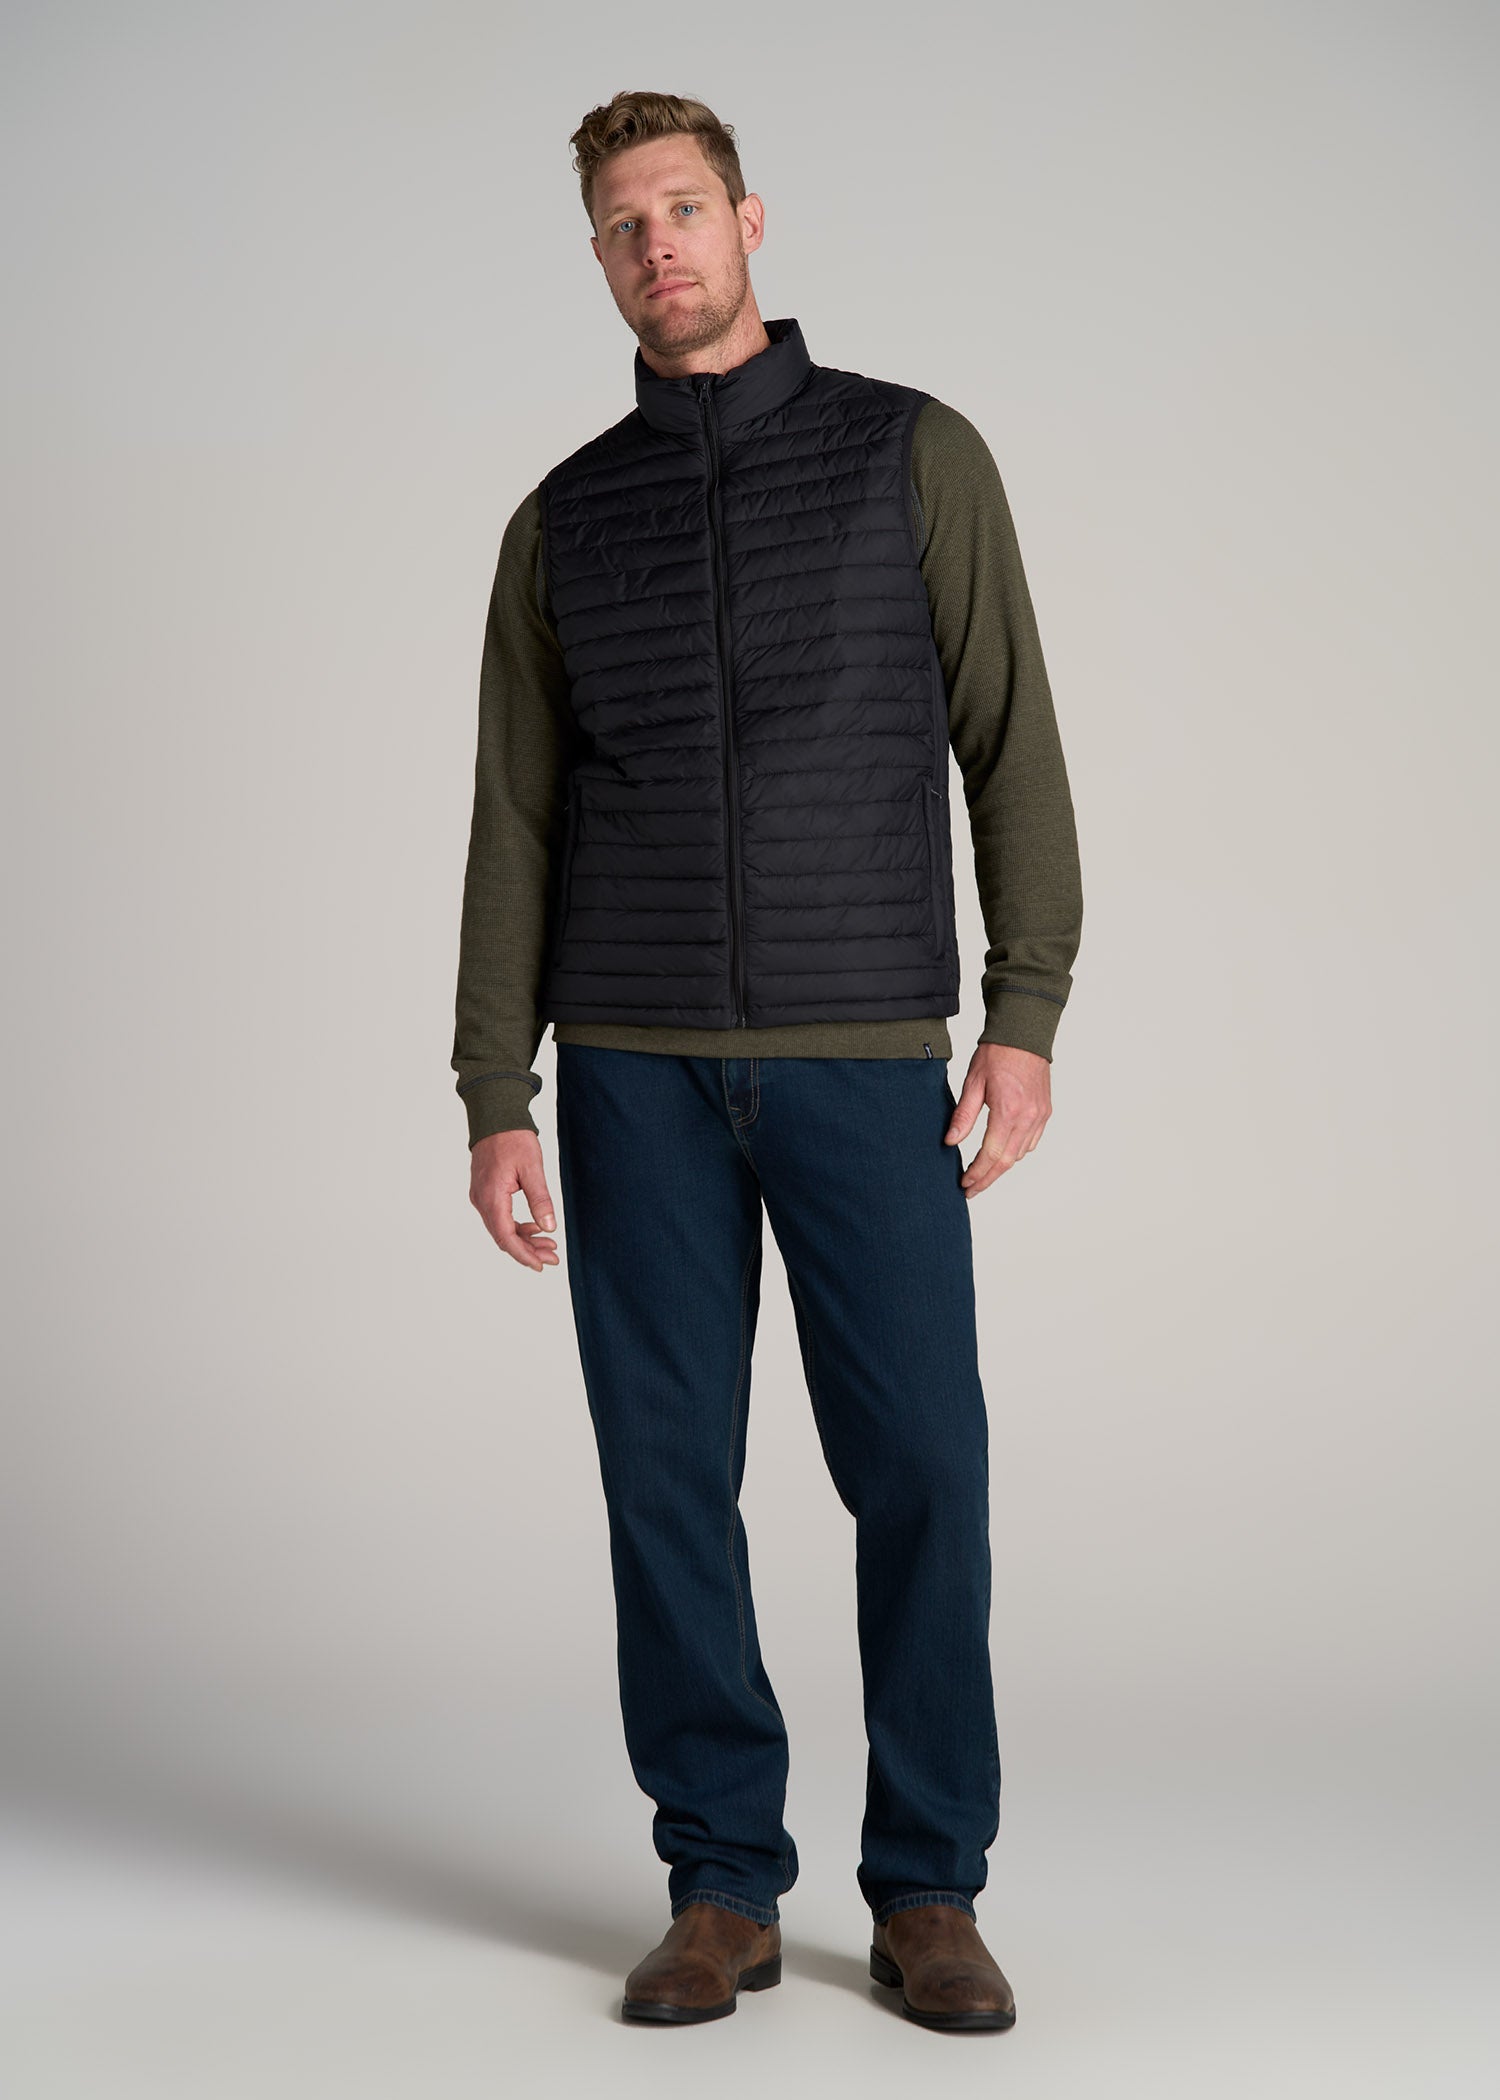 Men's Filled Full Zip Vest – Golf Team Products